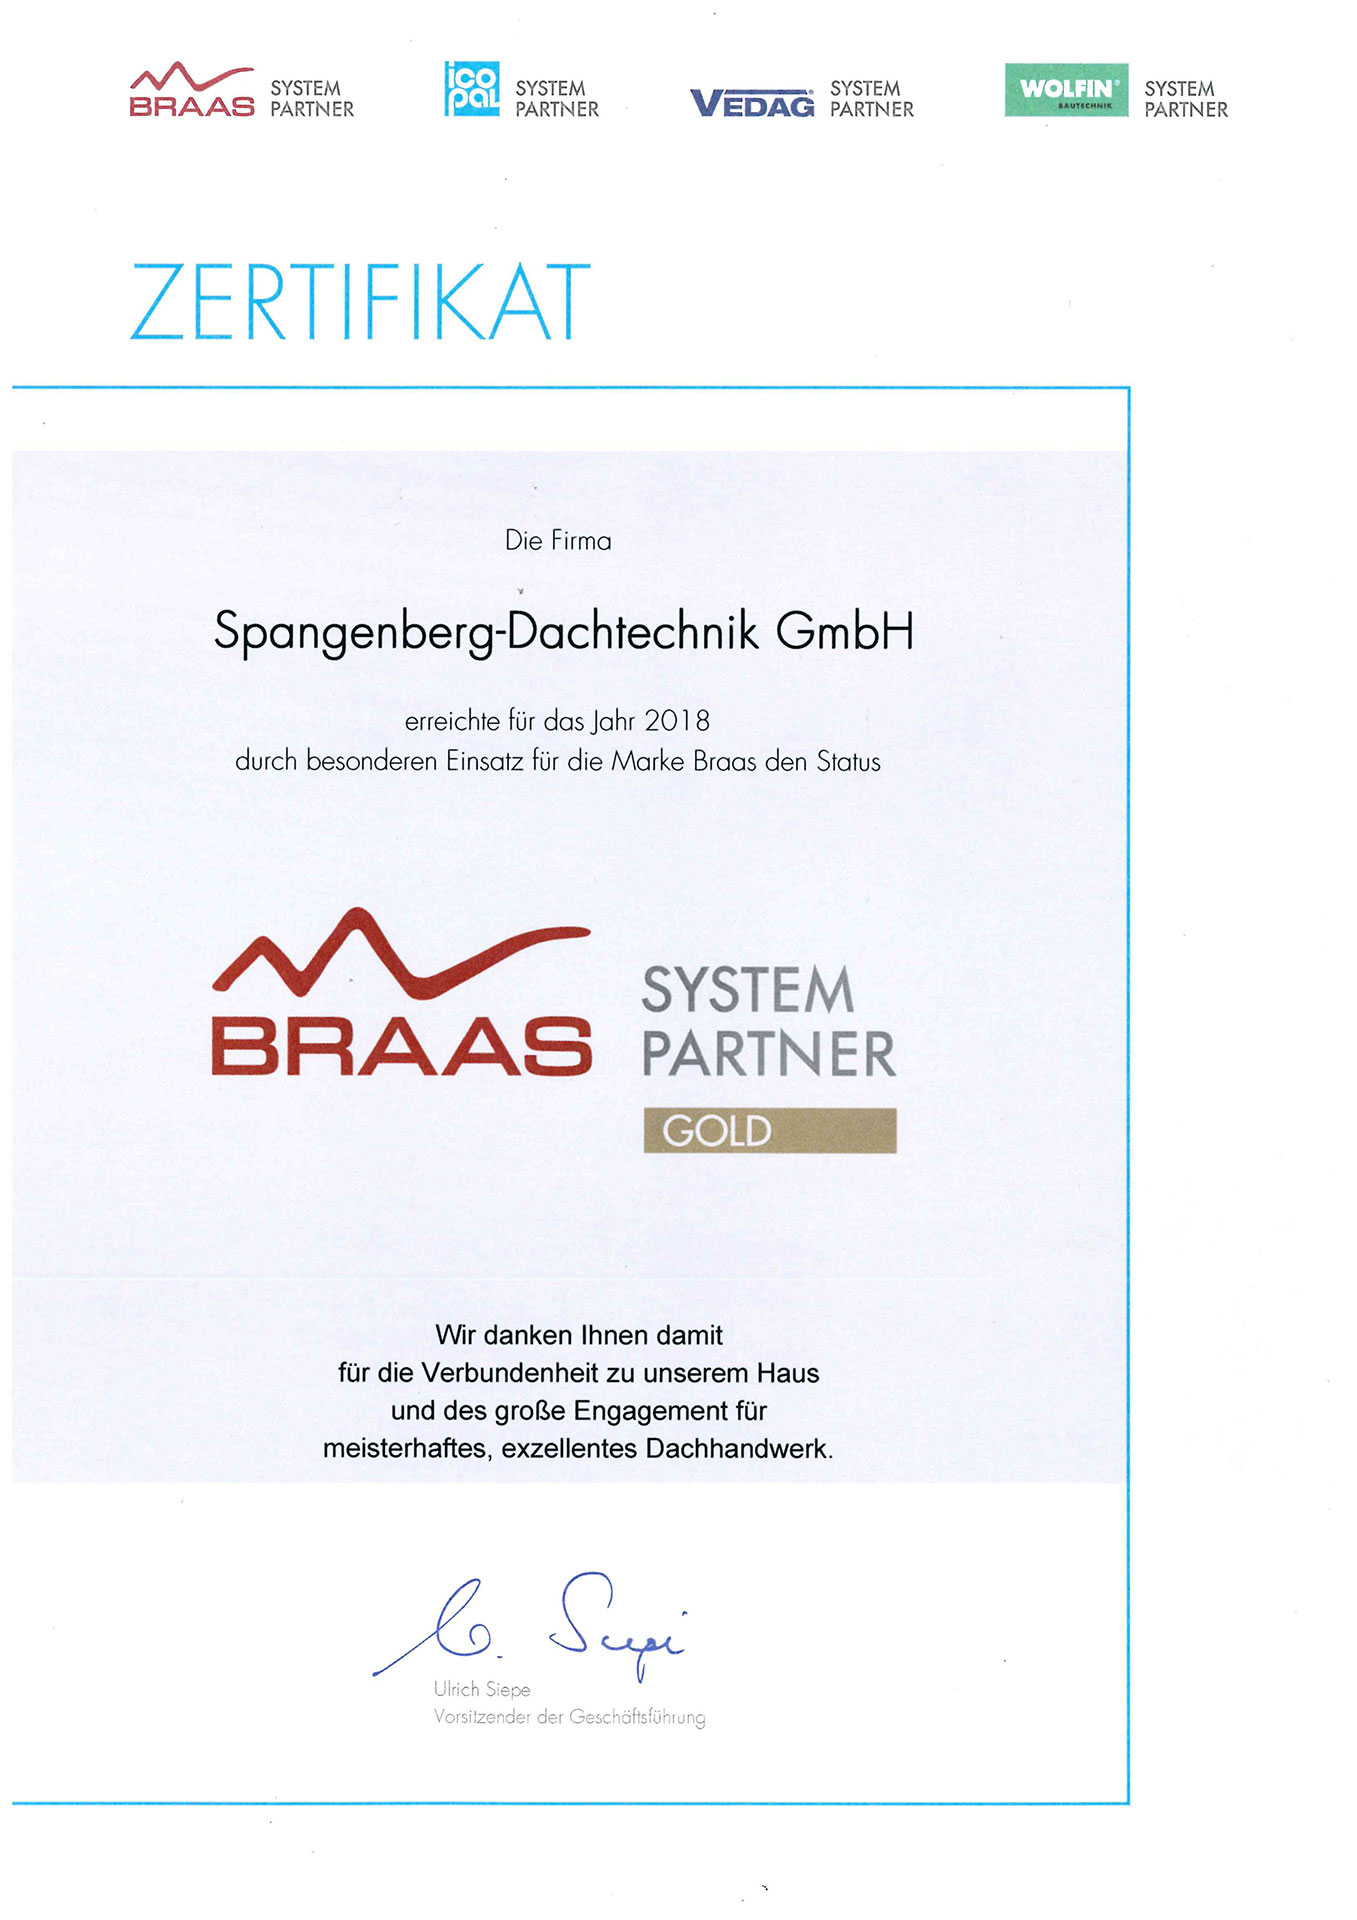 Zertifikat-2018_Braas_Systempartner-Gold